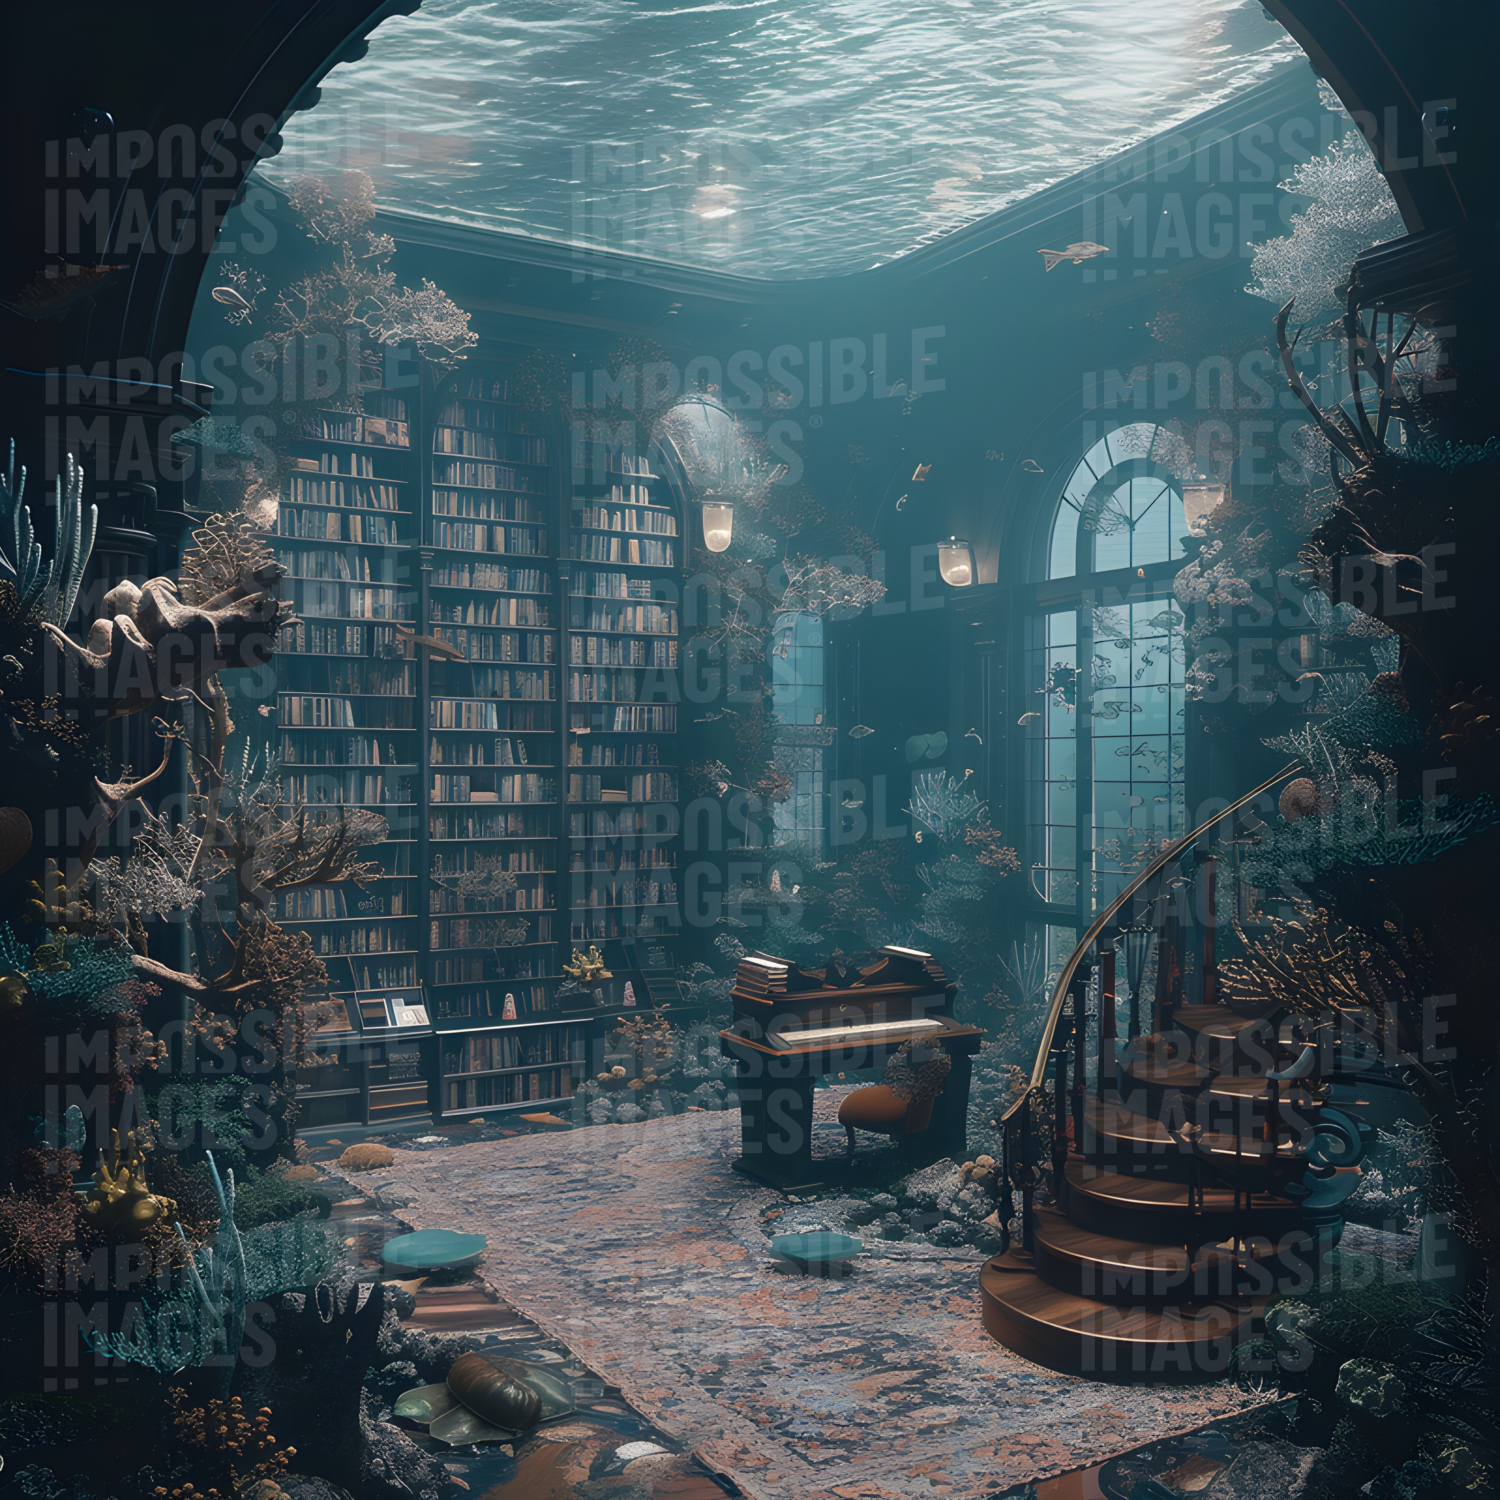 Beautiful underwater Victorian library